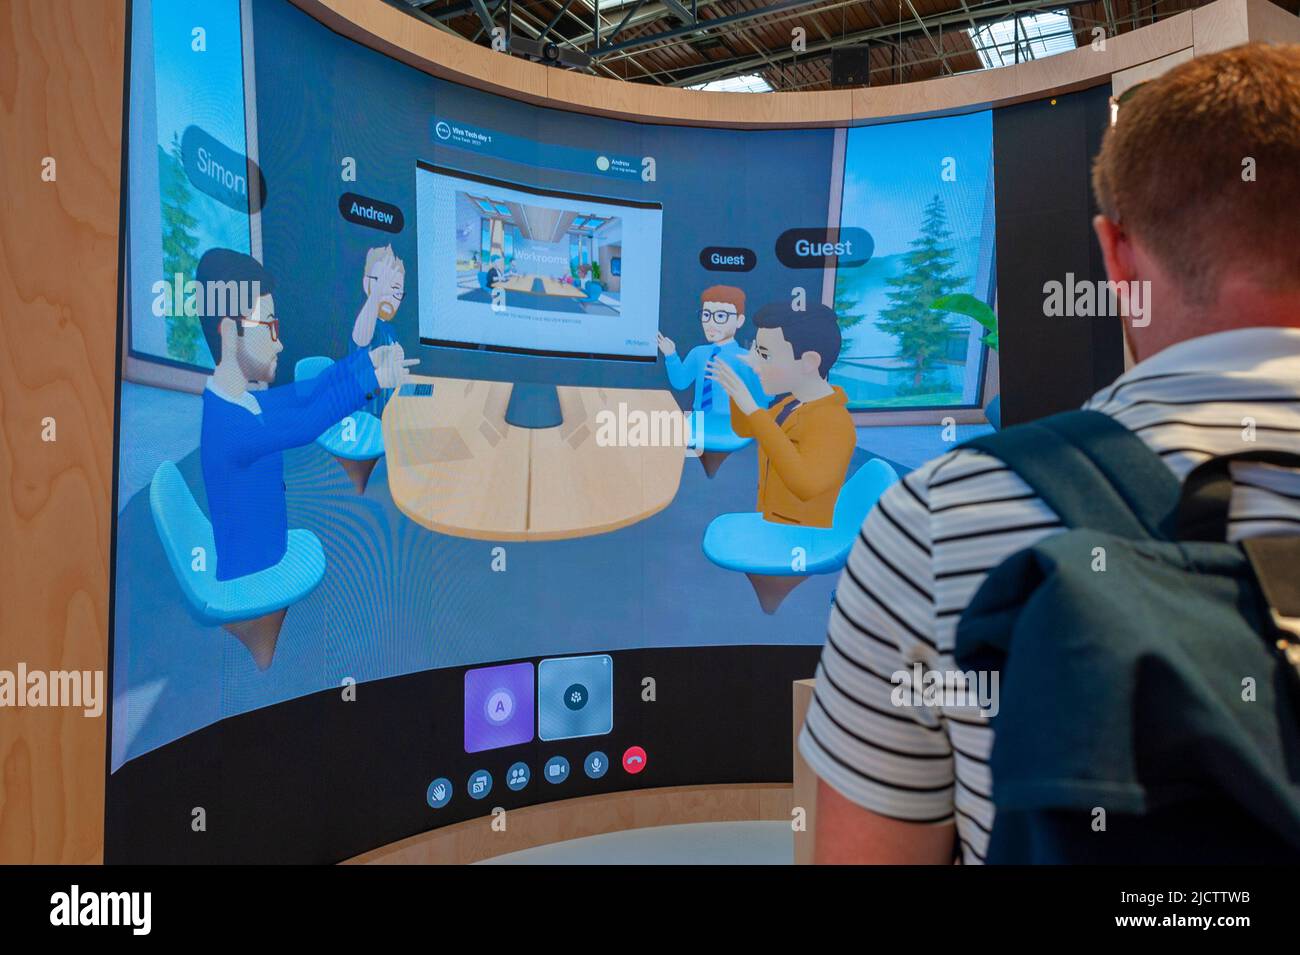 Horizon Workrooms: Facebook's Metaverse Starts With Virtual Reality  Meetings